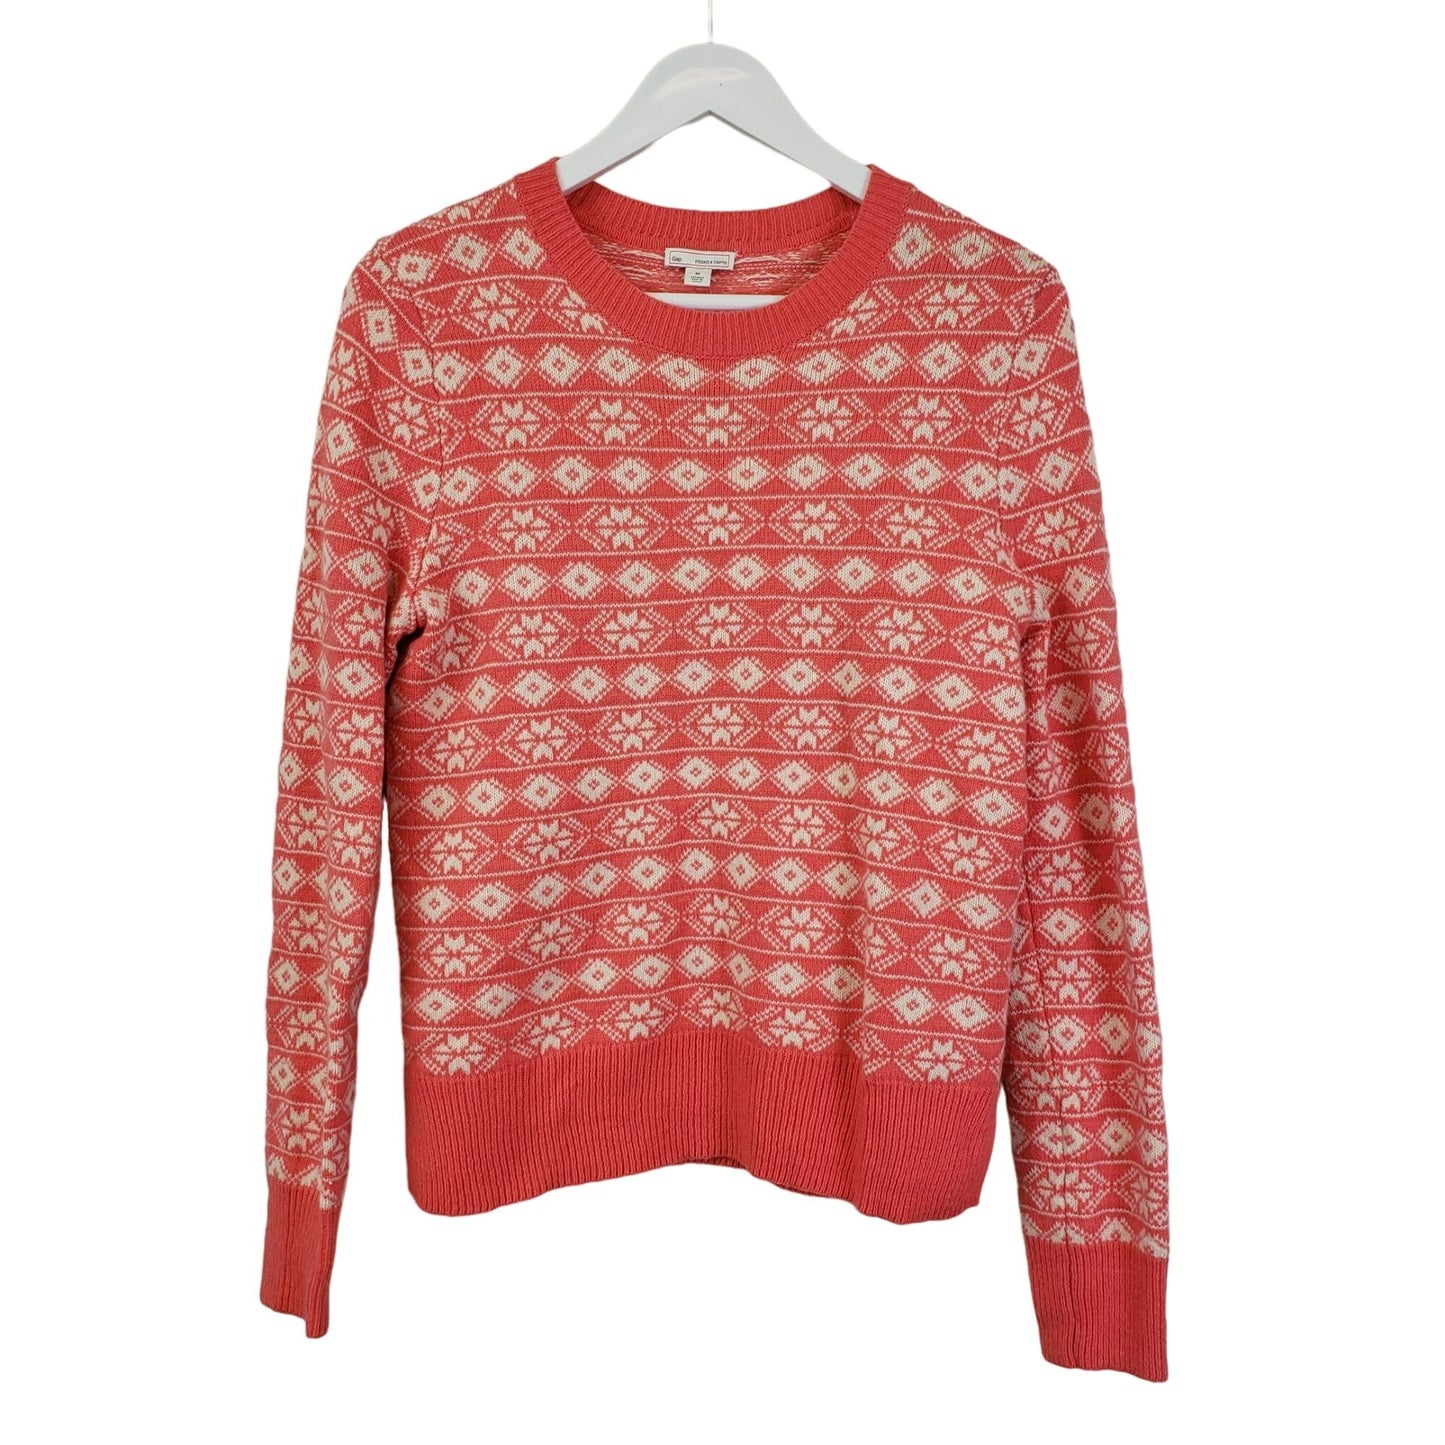 NWT Gap Wool Blend Snowflake Print Sweater Size S/M